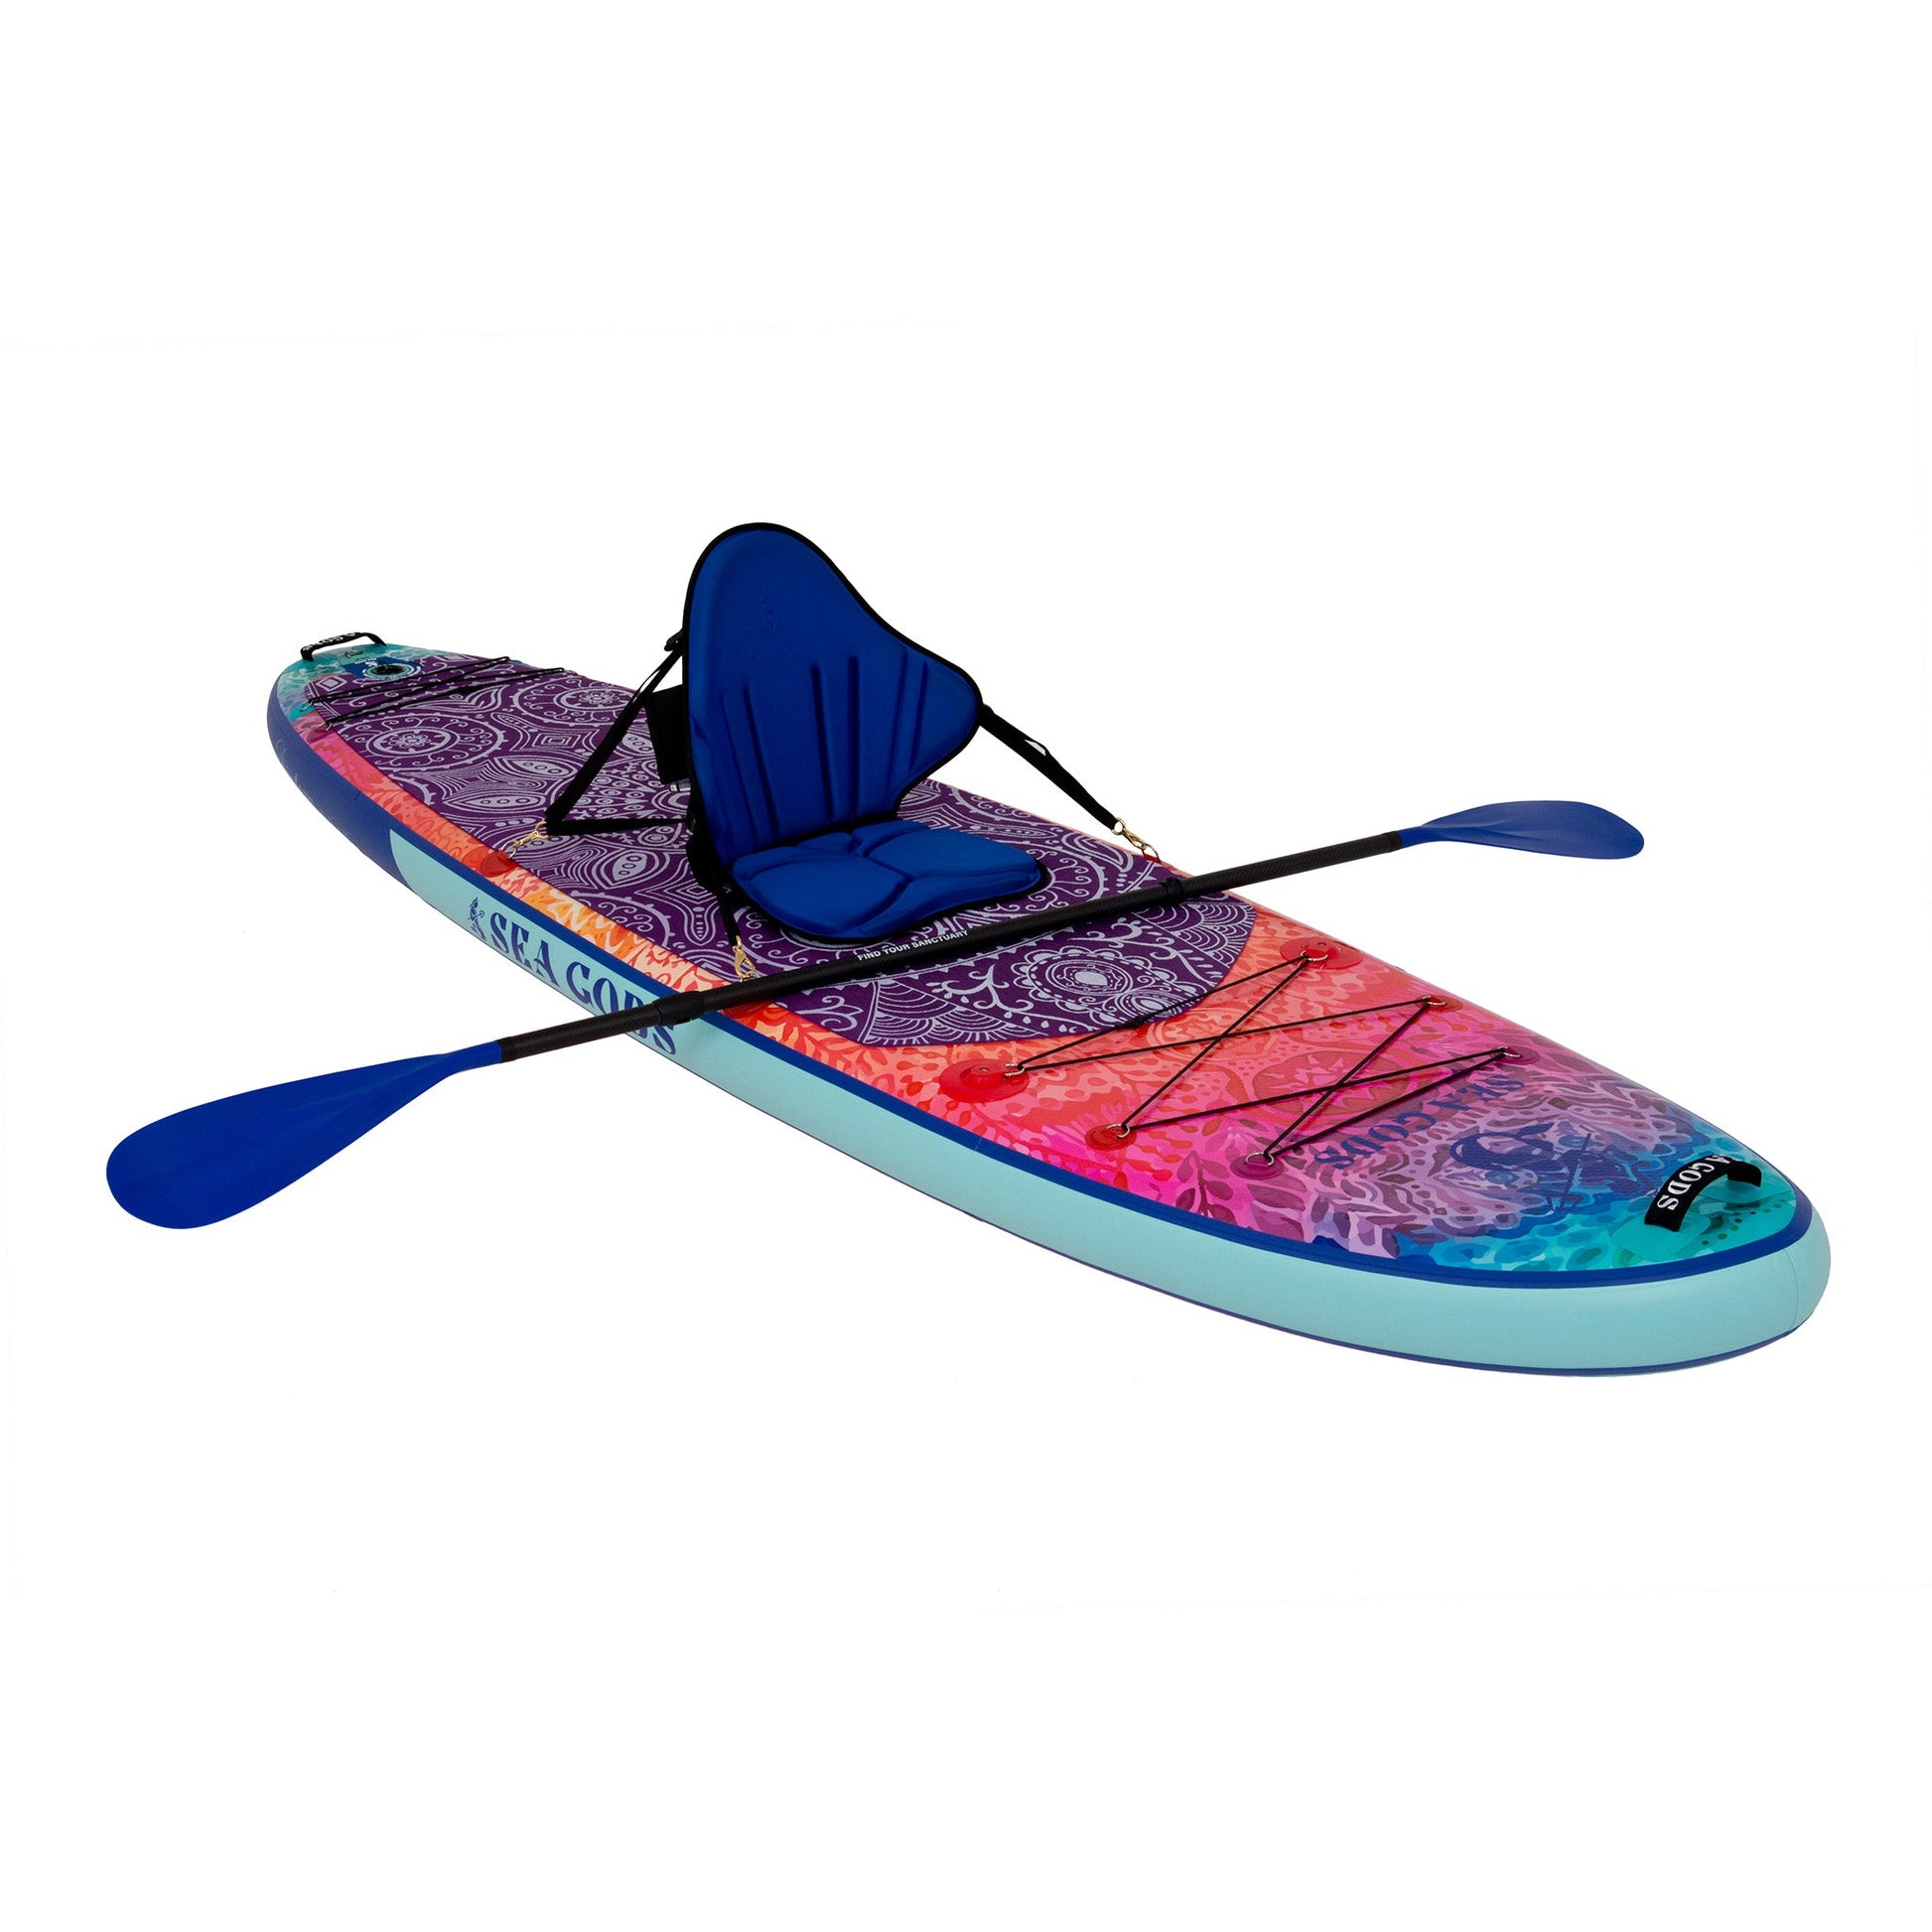 Diatom SUP Board with kayak seat